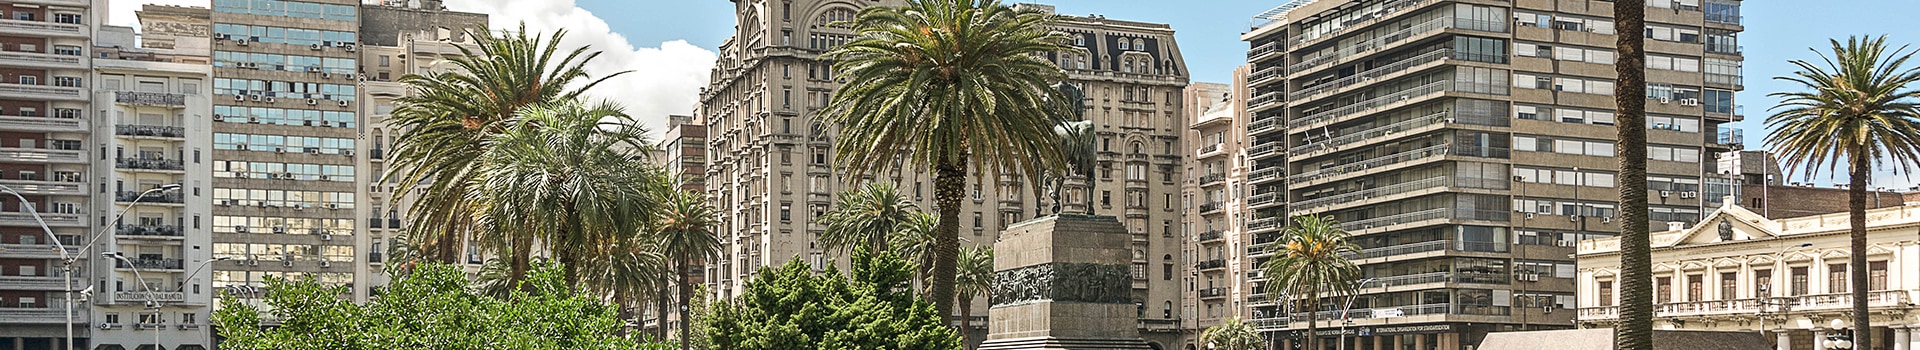 Madrid - Montevideo - carrasco intl